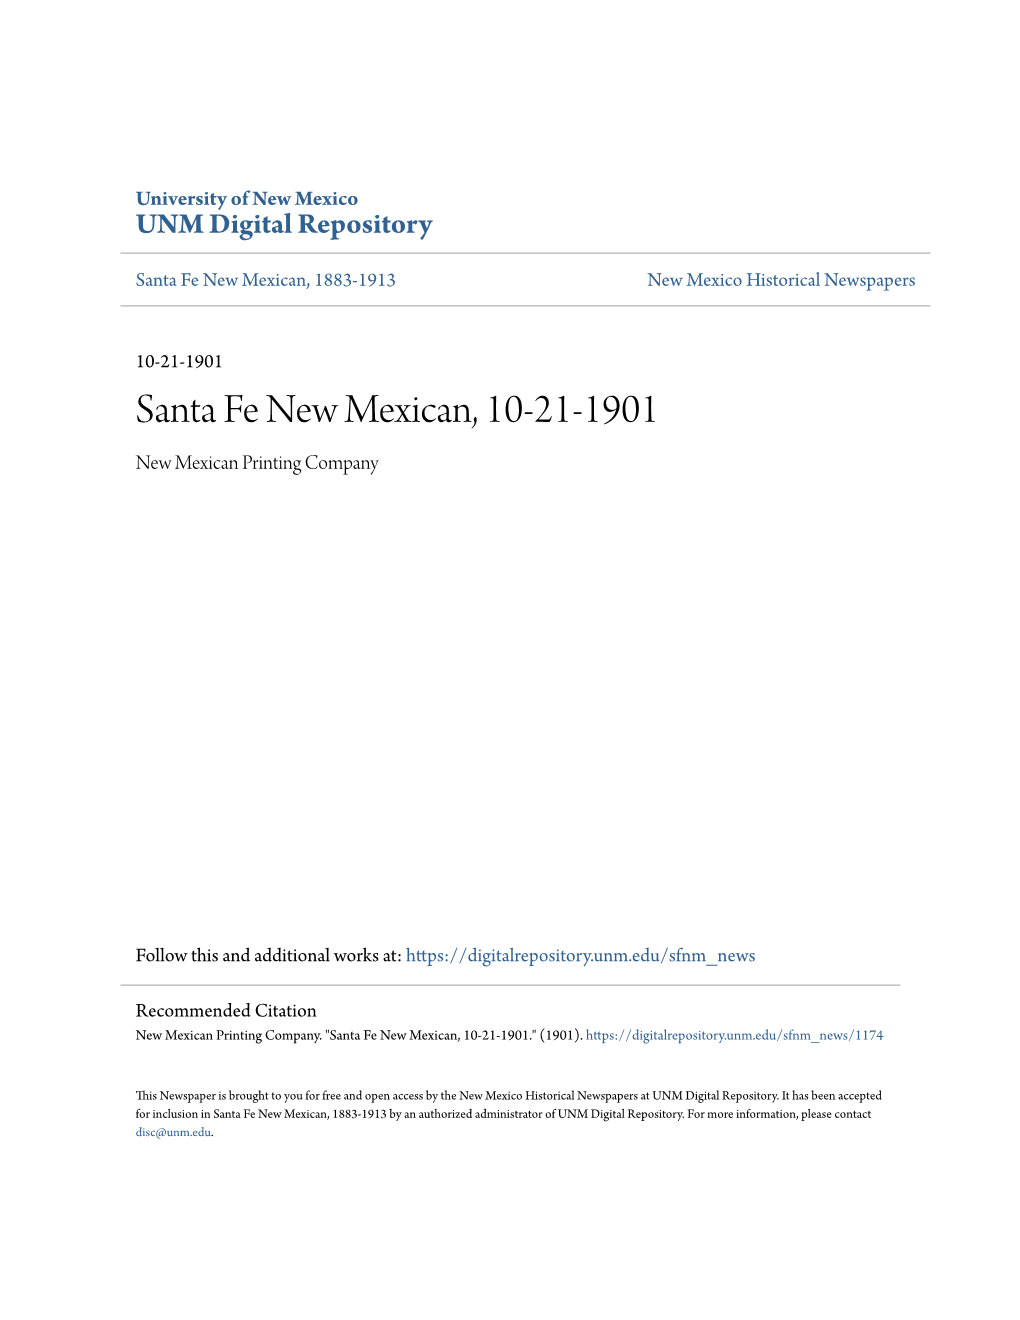 Santa Fe New Mexican, 10-21-1901 New Mexican Printing Company